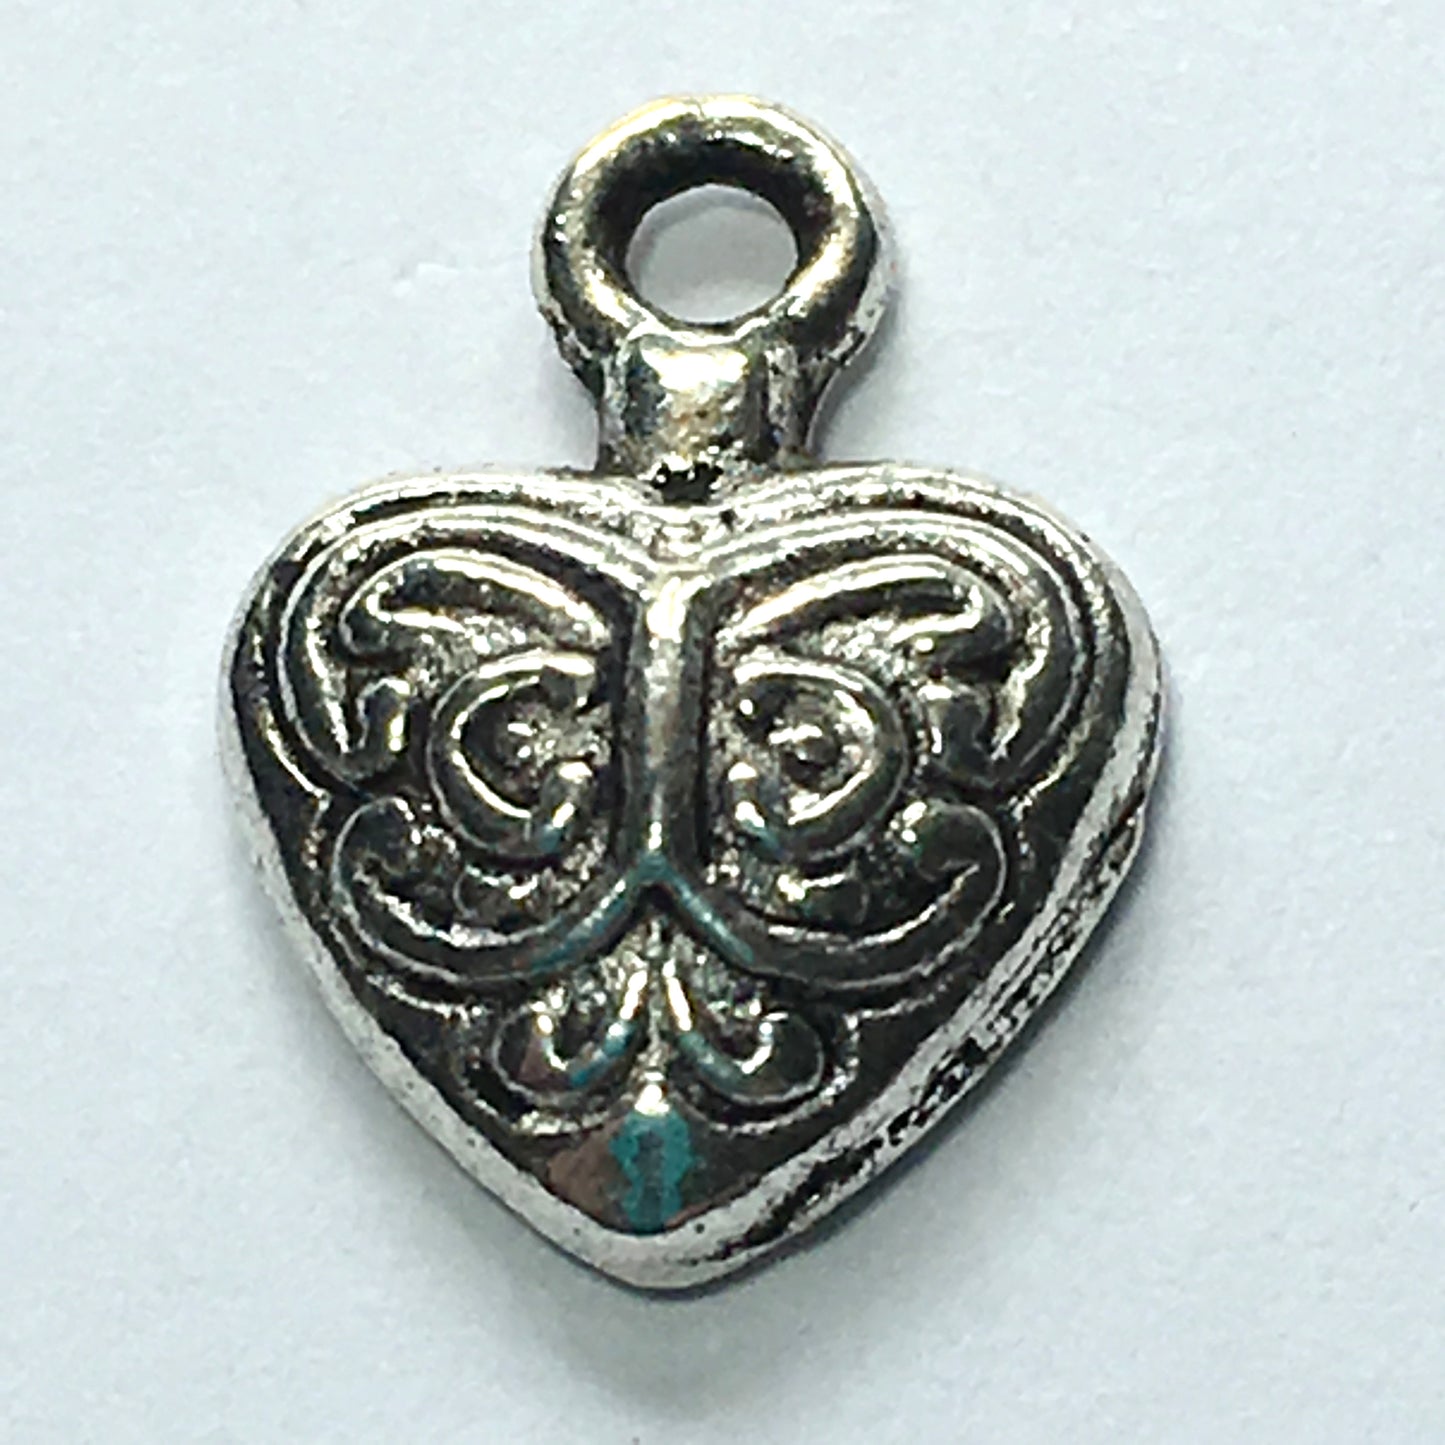 Antique Silver Heart Charm, 15 x 10 mm